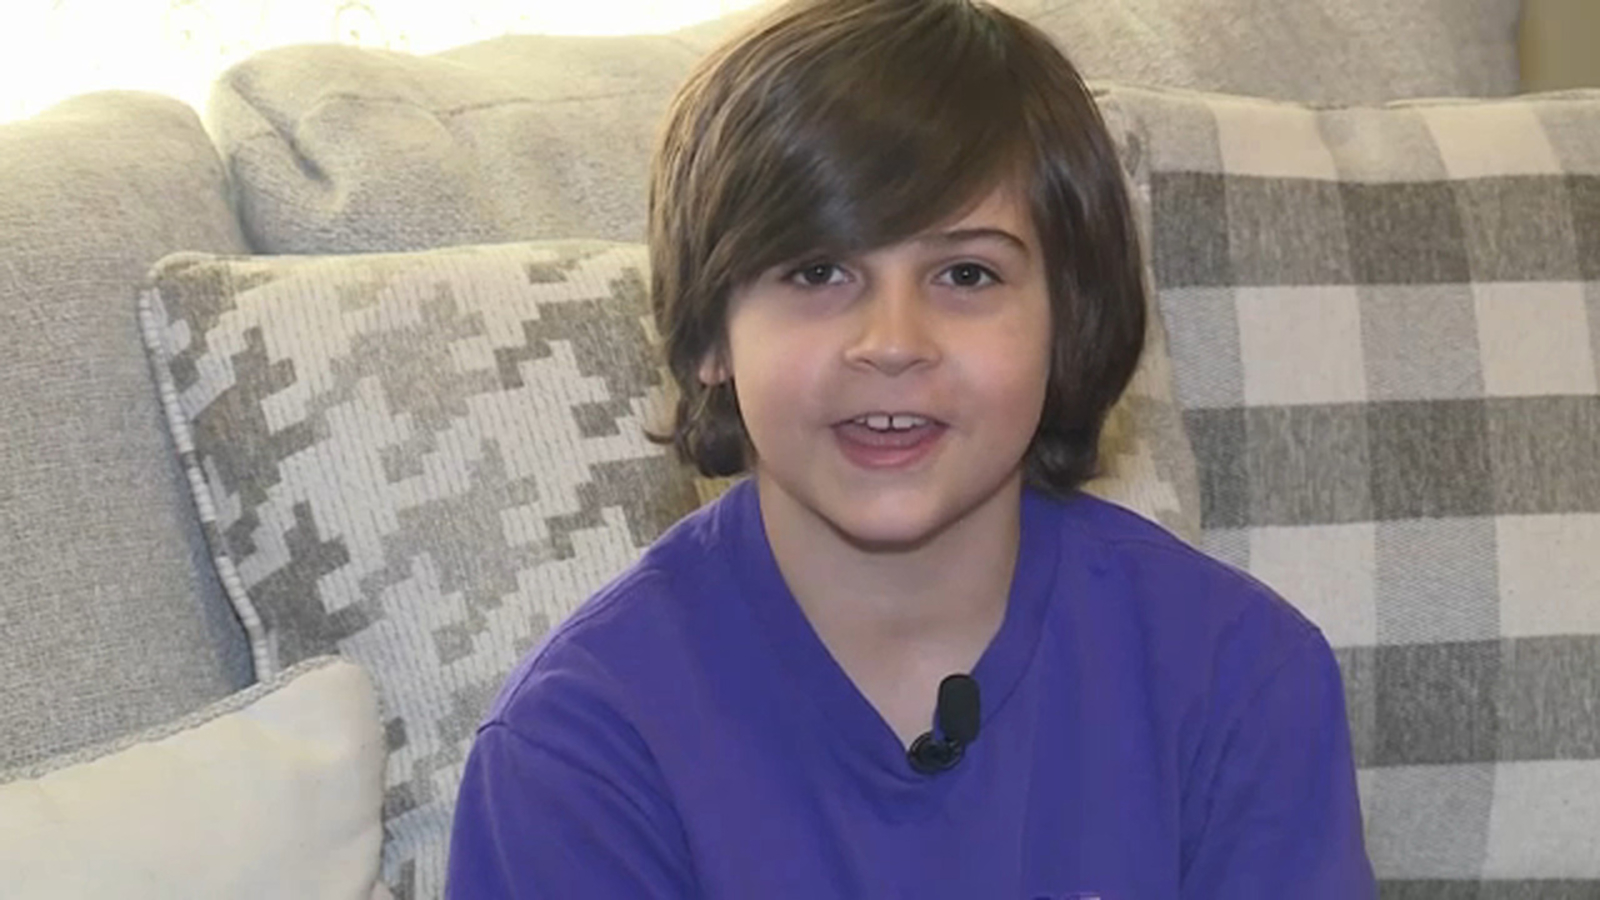 Missouri 5th grader Daken Kramer raising money to pay off classmates’ school lunch debt [Video]